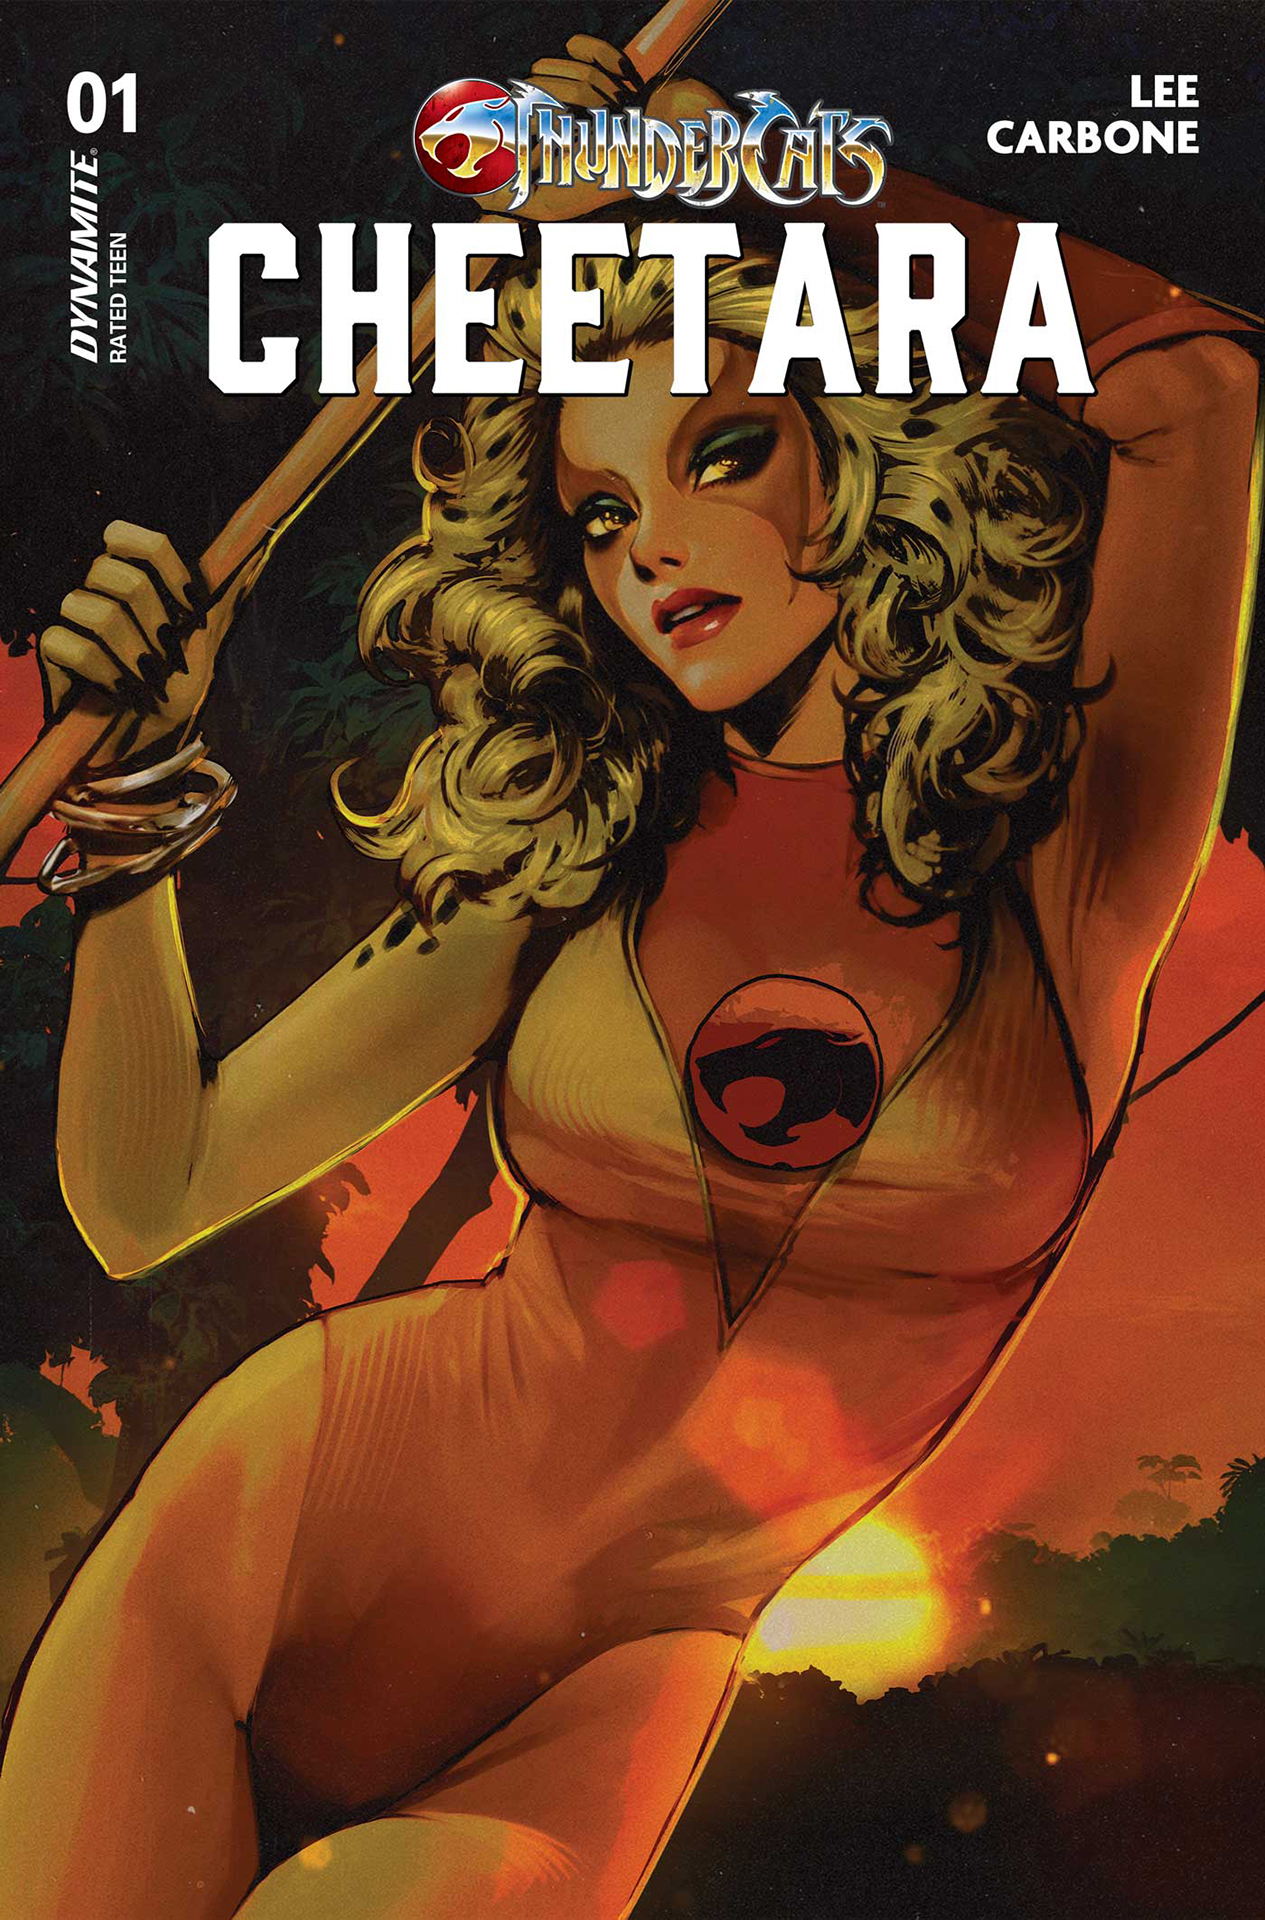 Cheetara #1 cover art